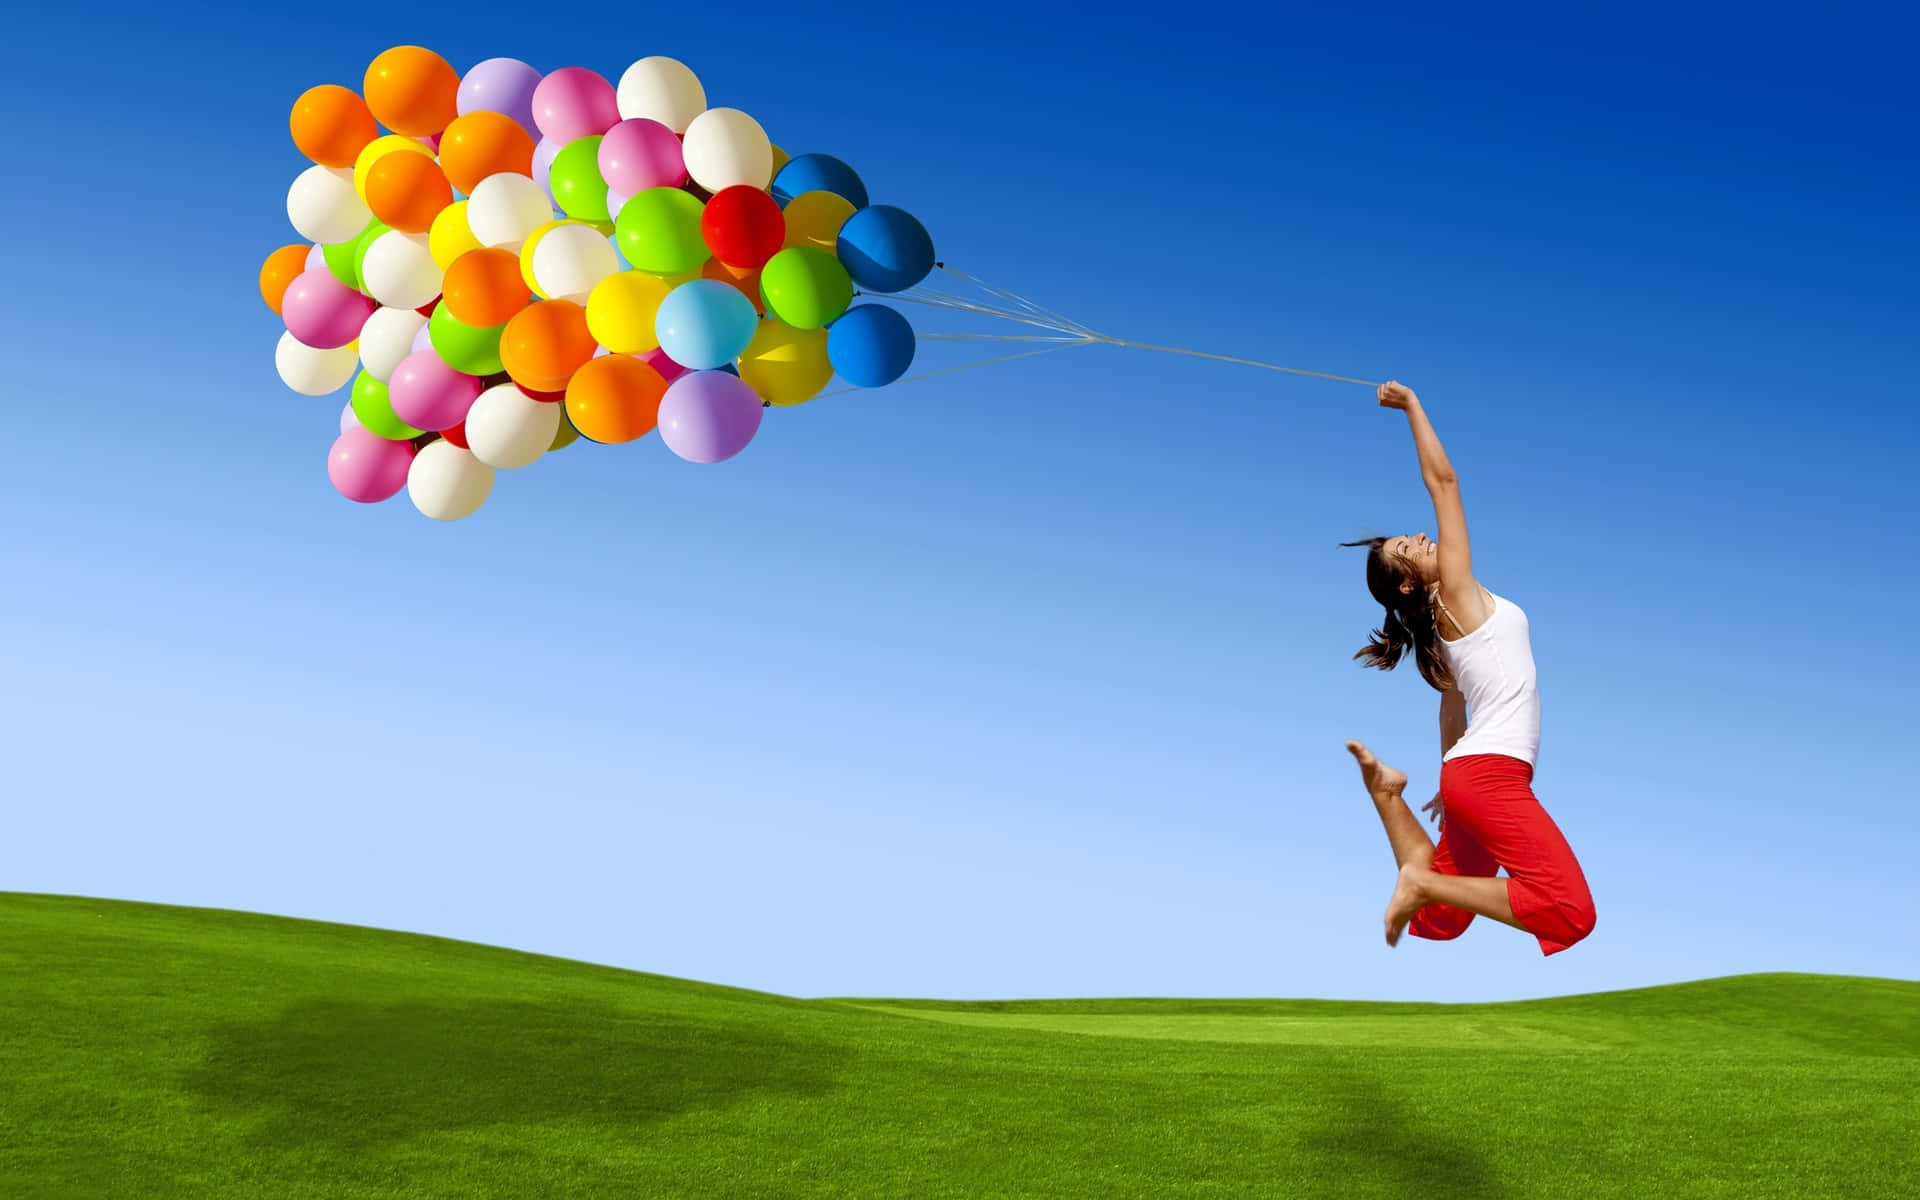 Hintergrundmit Luftballons Frau Springt Mit Luftballons